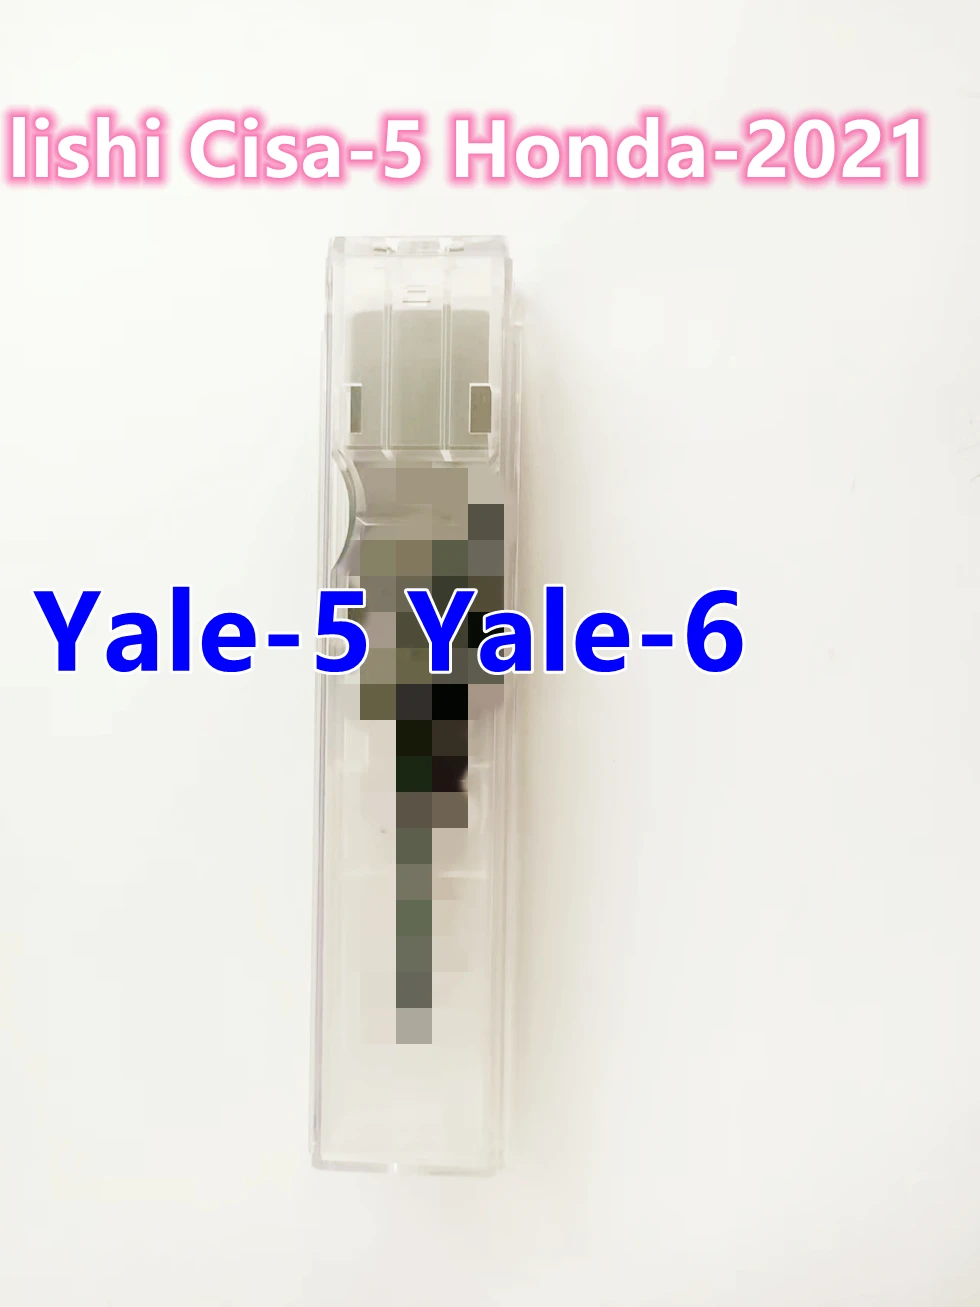 

New 2in1 Li s hi Tool Cisa-5 2 in 1 TOOLS lishi Yale-5 Yale-6 Honda-2021 locksmith tool /lot